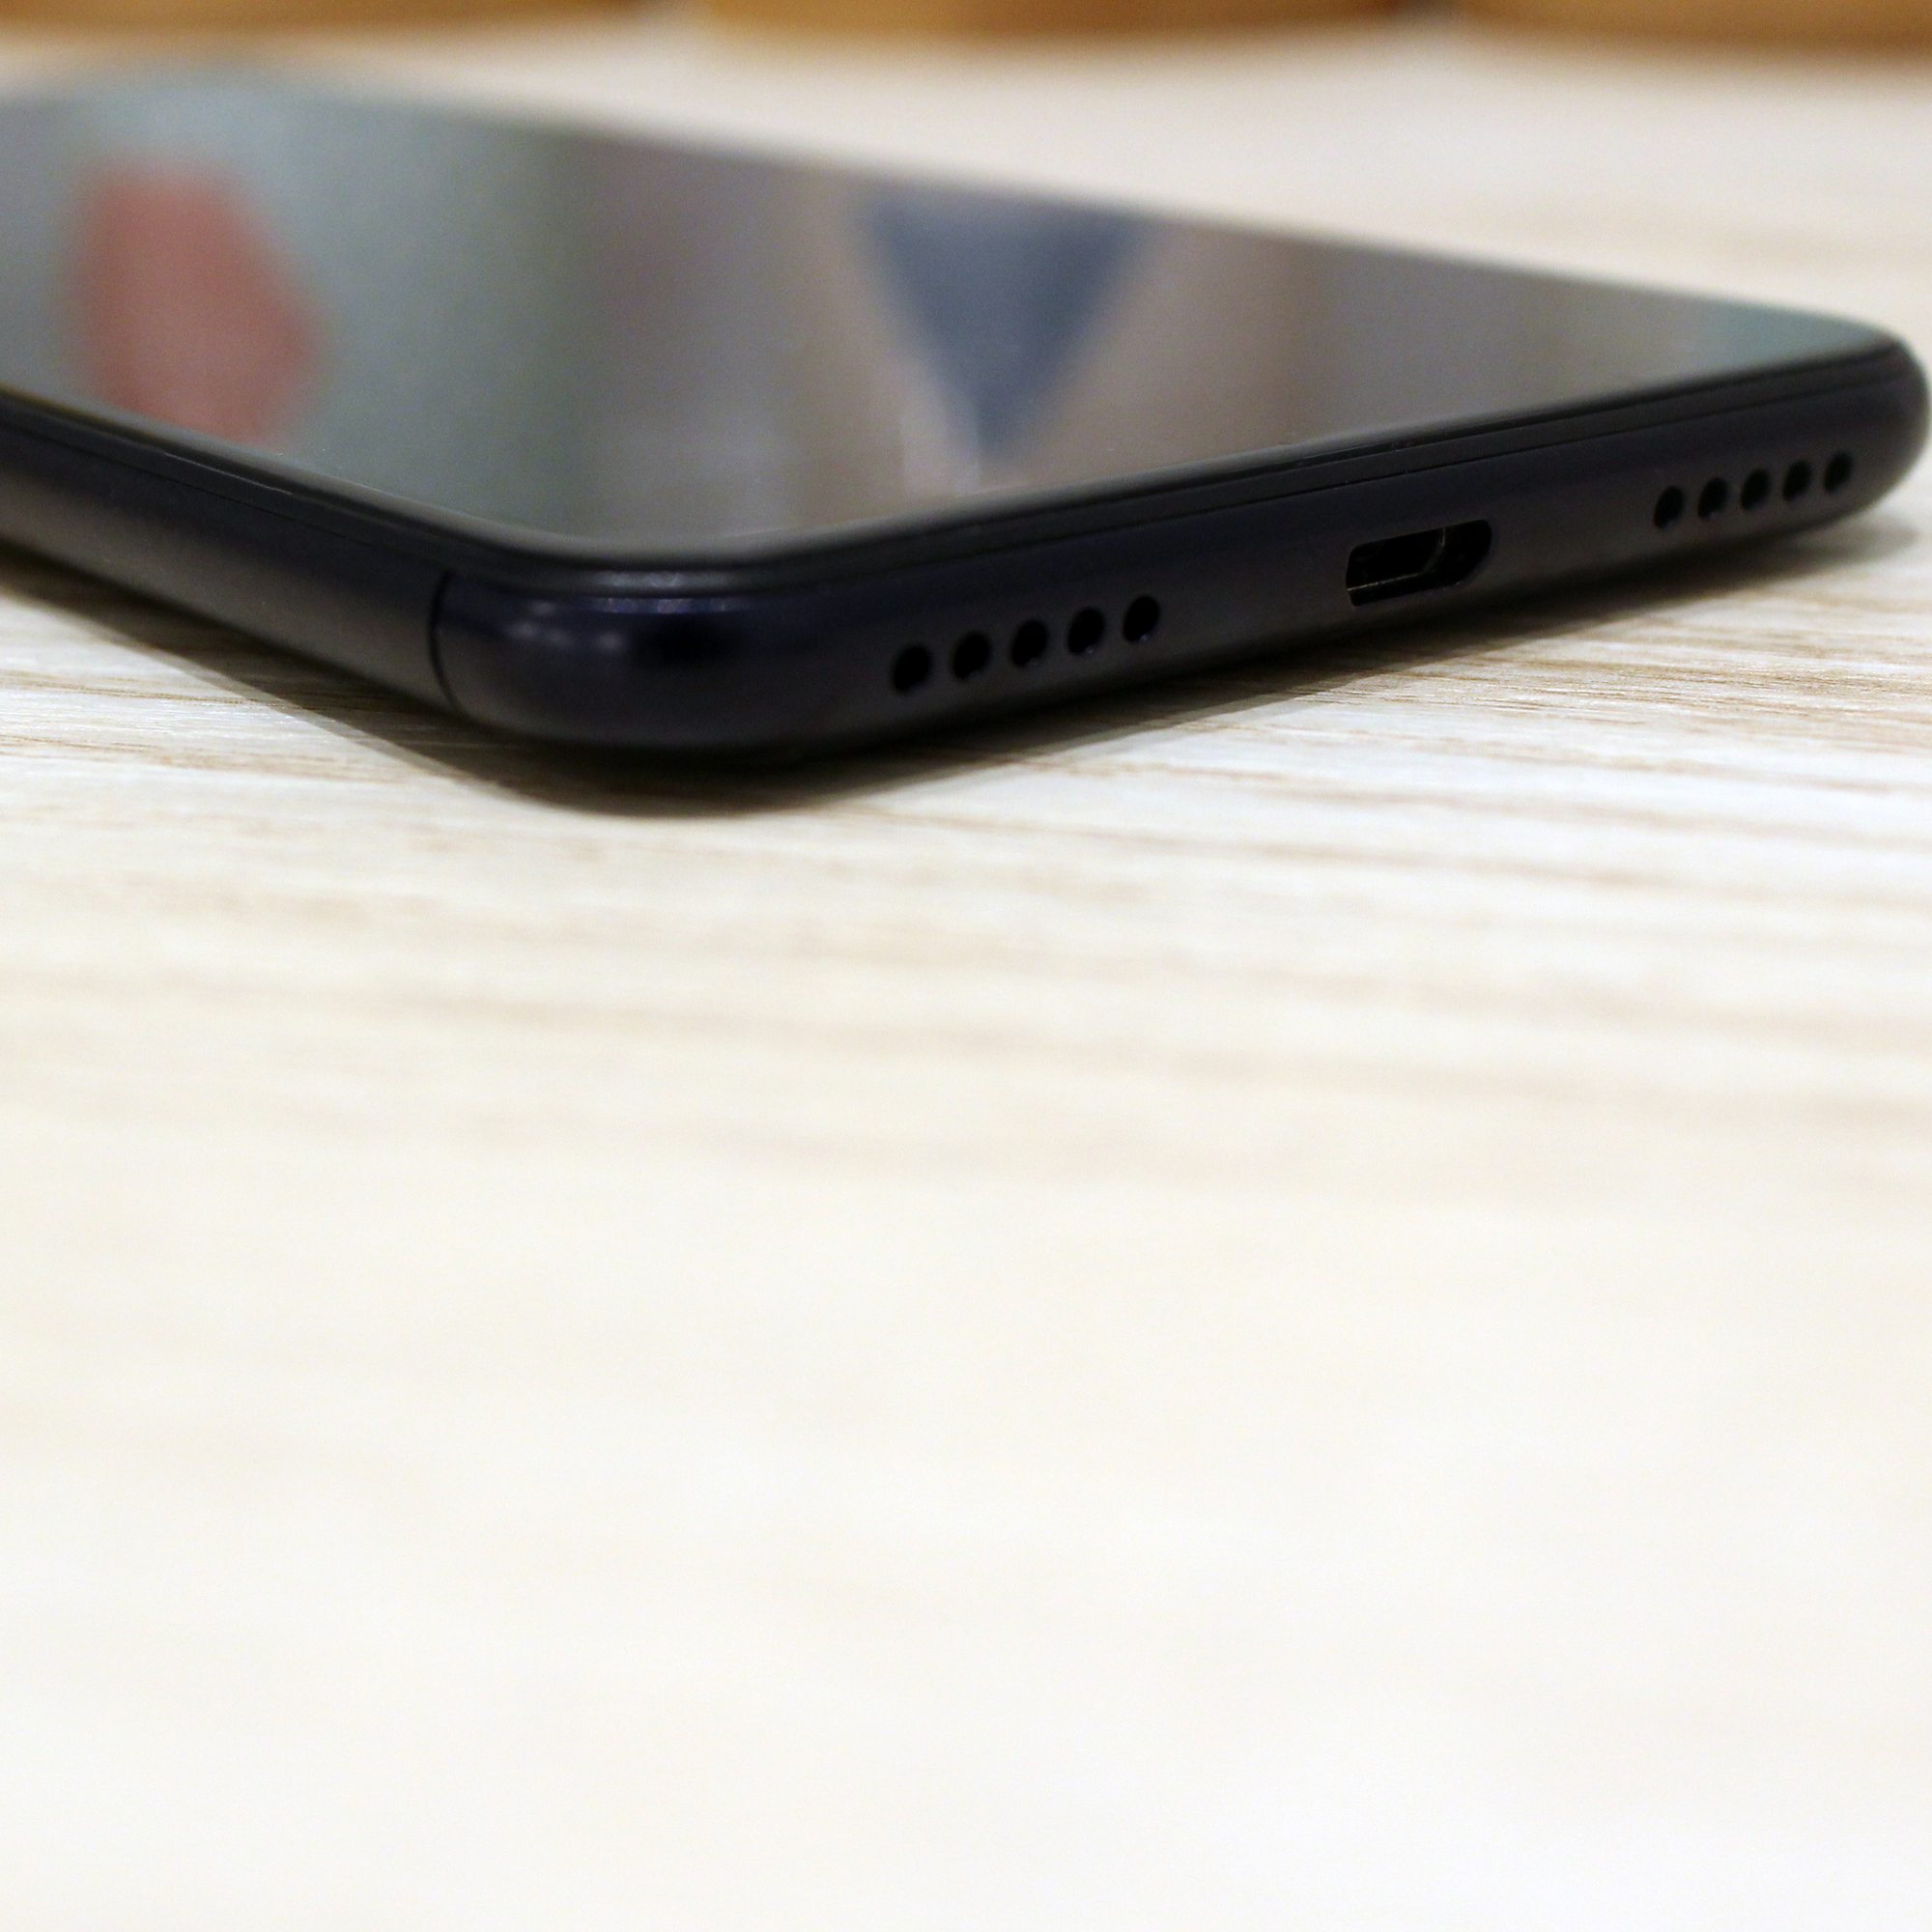 Asus IMG 1450 TEST – Asus Zenfone Max Plus M1 : Un smartphone qui reprend les bases de la marque asus